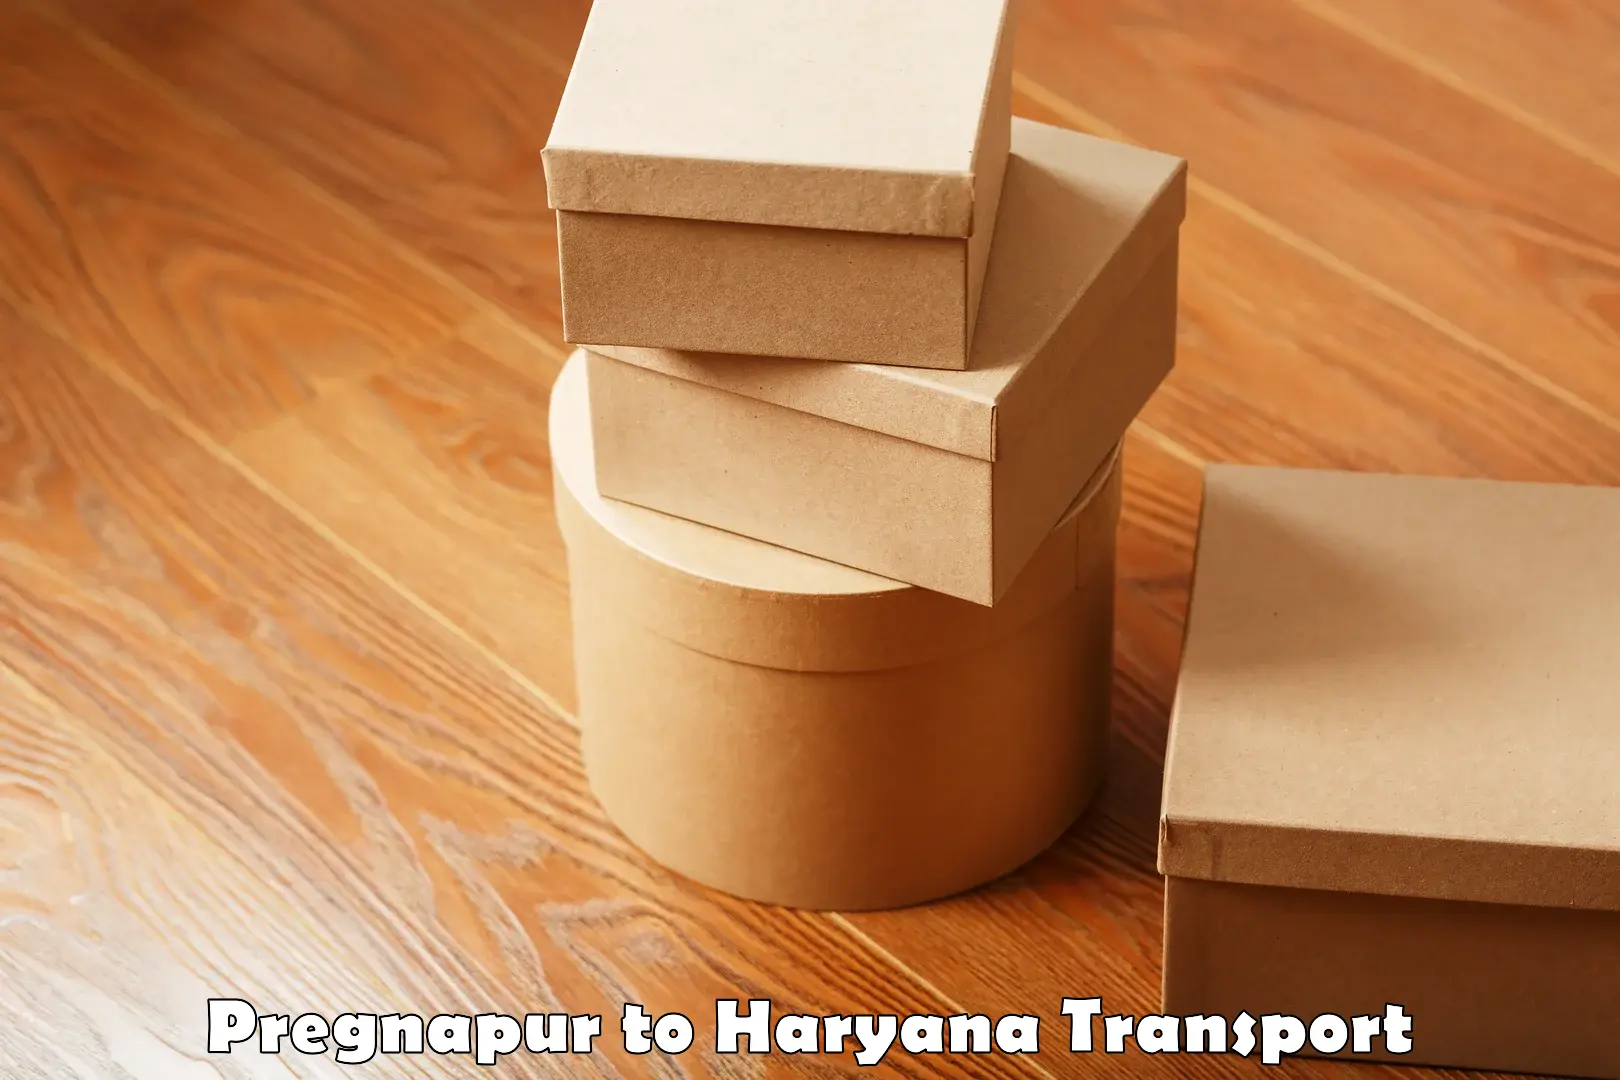 Goods delivery service Pregnapur to Bilaspur Haryana